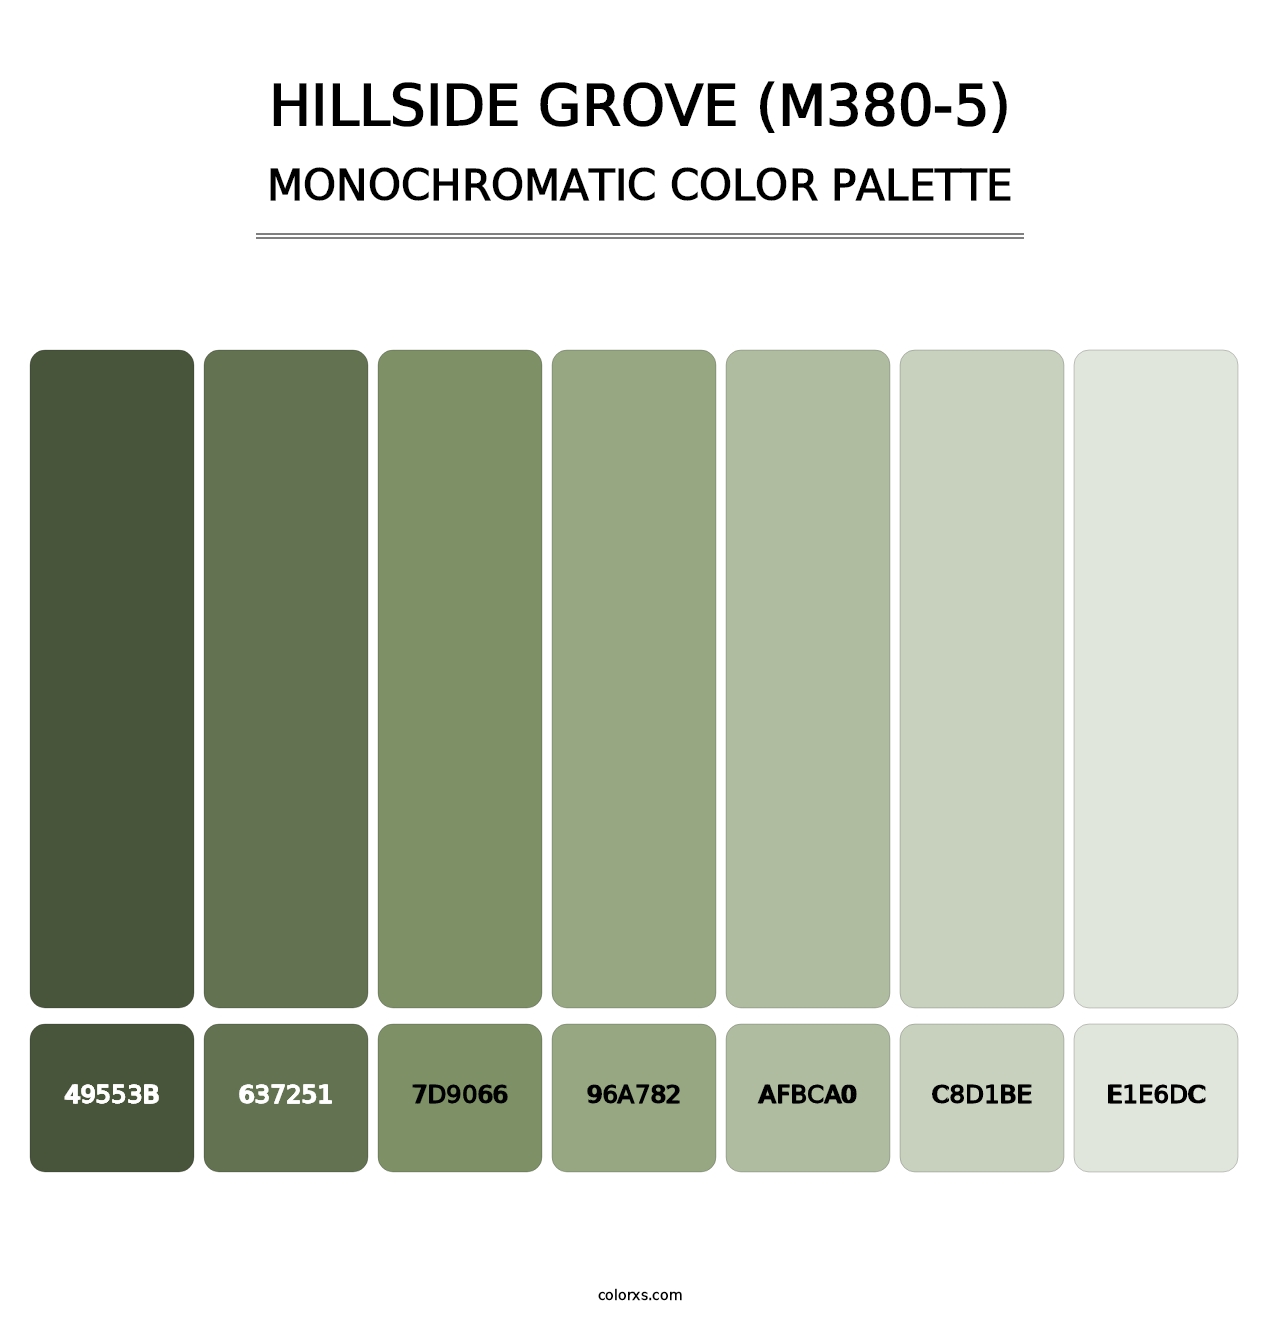 Hillside Grove (M380-5) - Monochromatic Color Palette